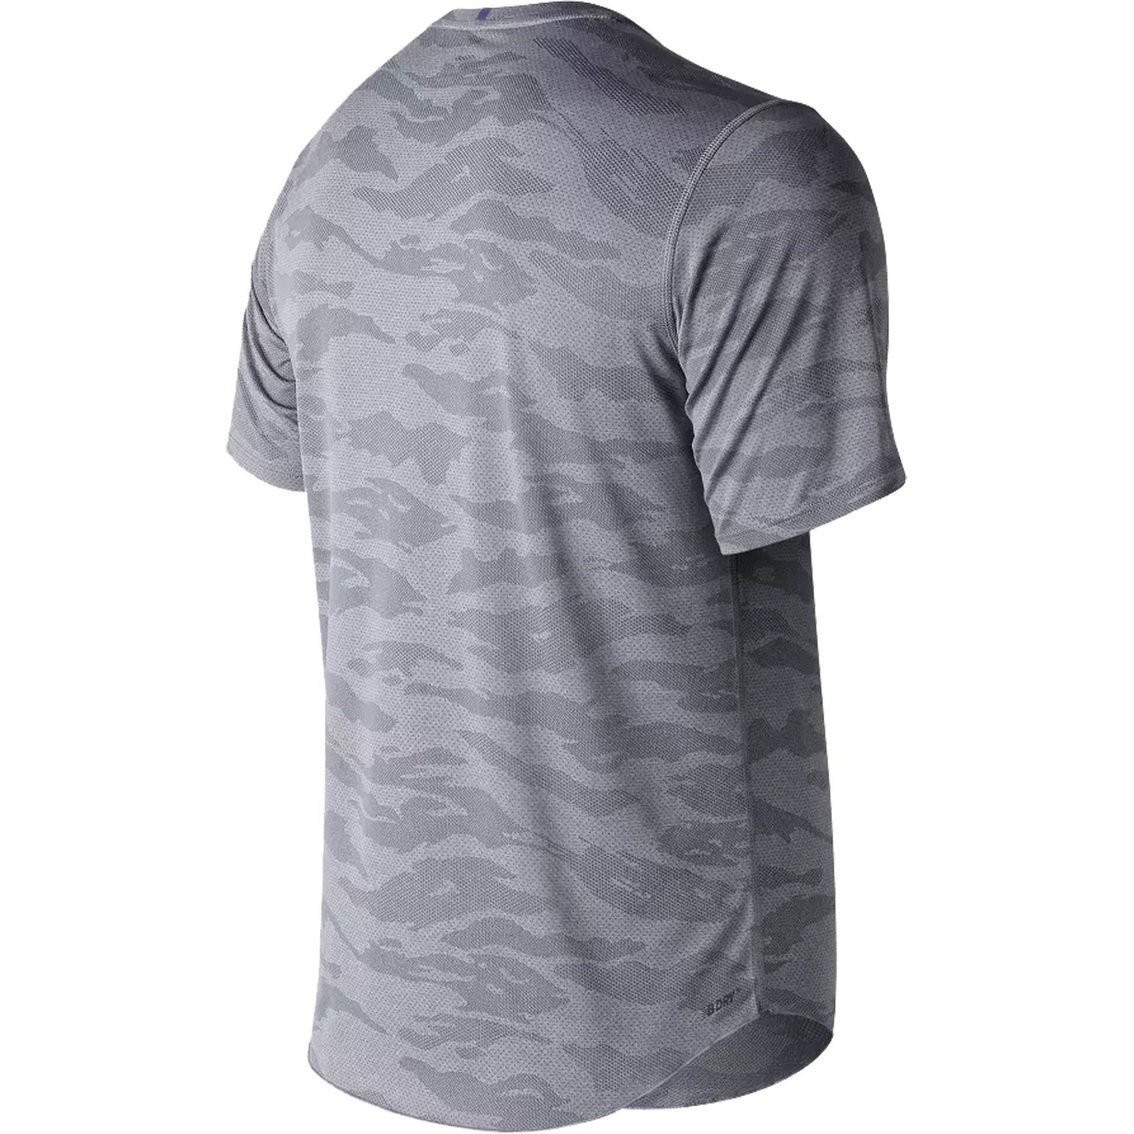 New Balance Q Speed Breathe Tee | Shirts | Clothing & Accessories ...